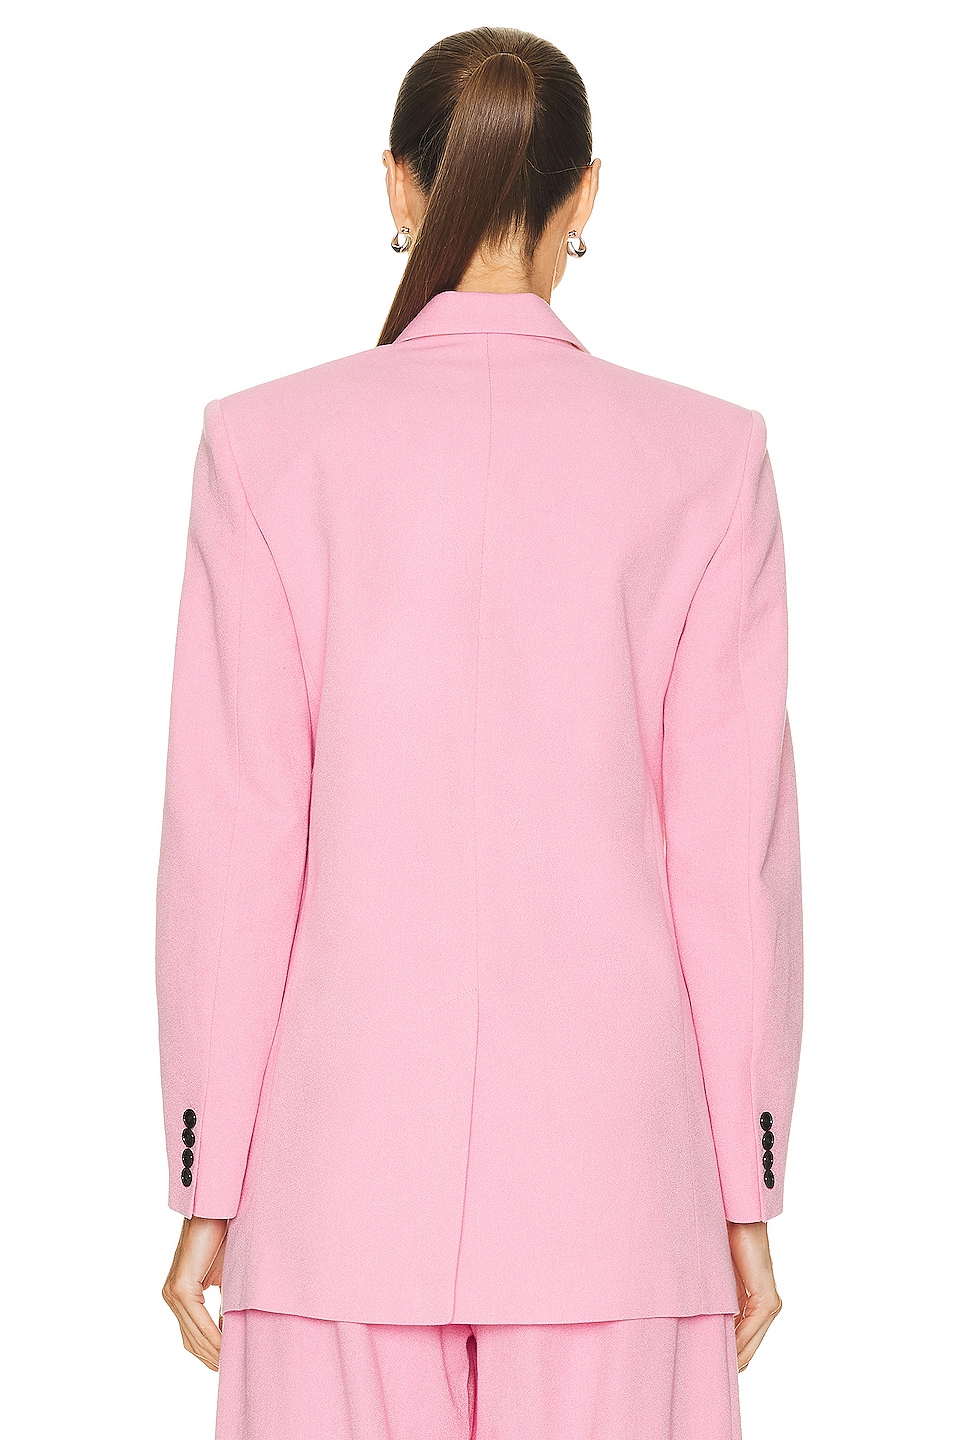 Isabel Marant Nevim Check Coat in Pink | FWRD